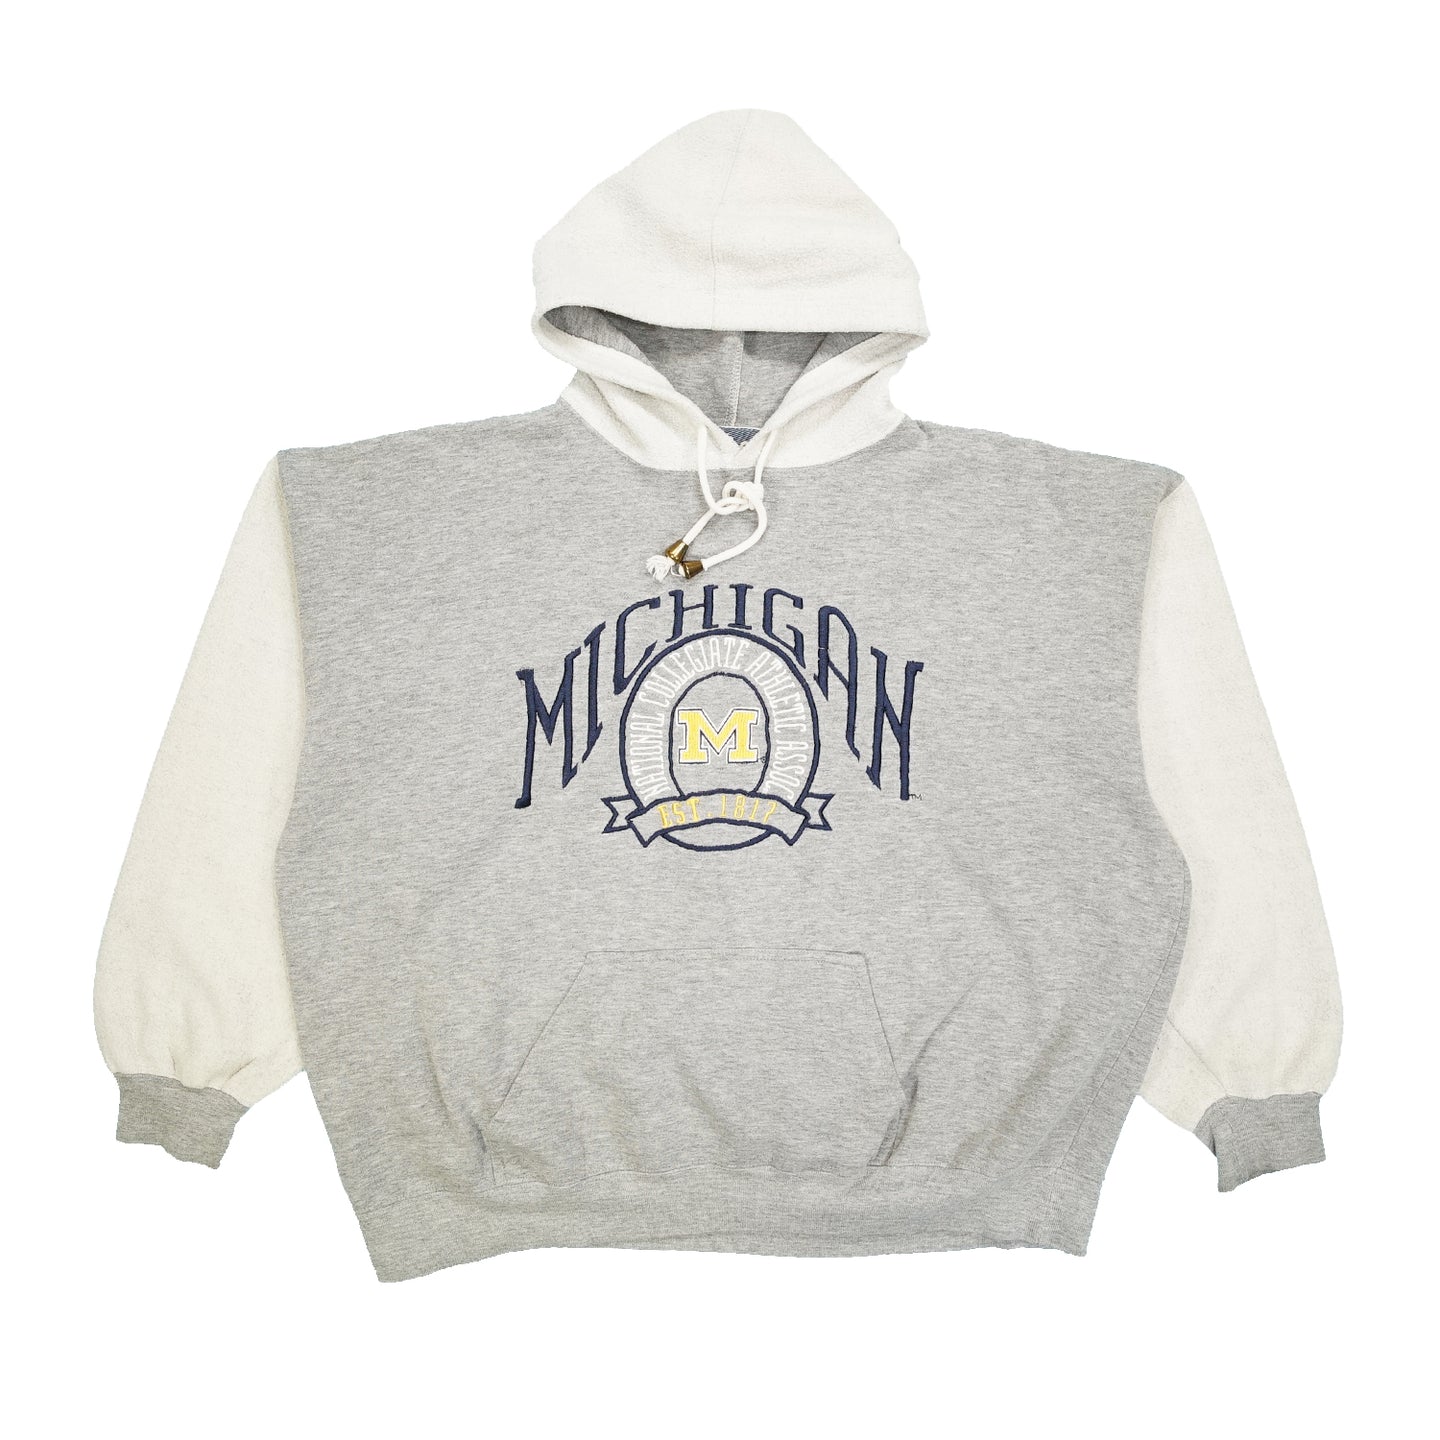 Vintage Michigan University hoodie XL